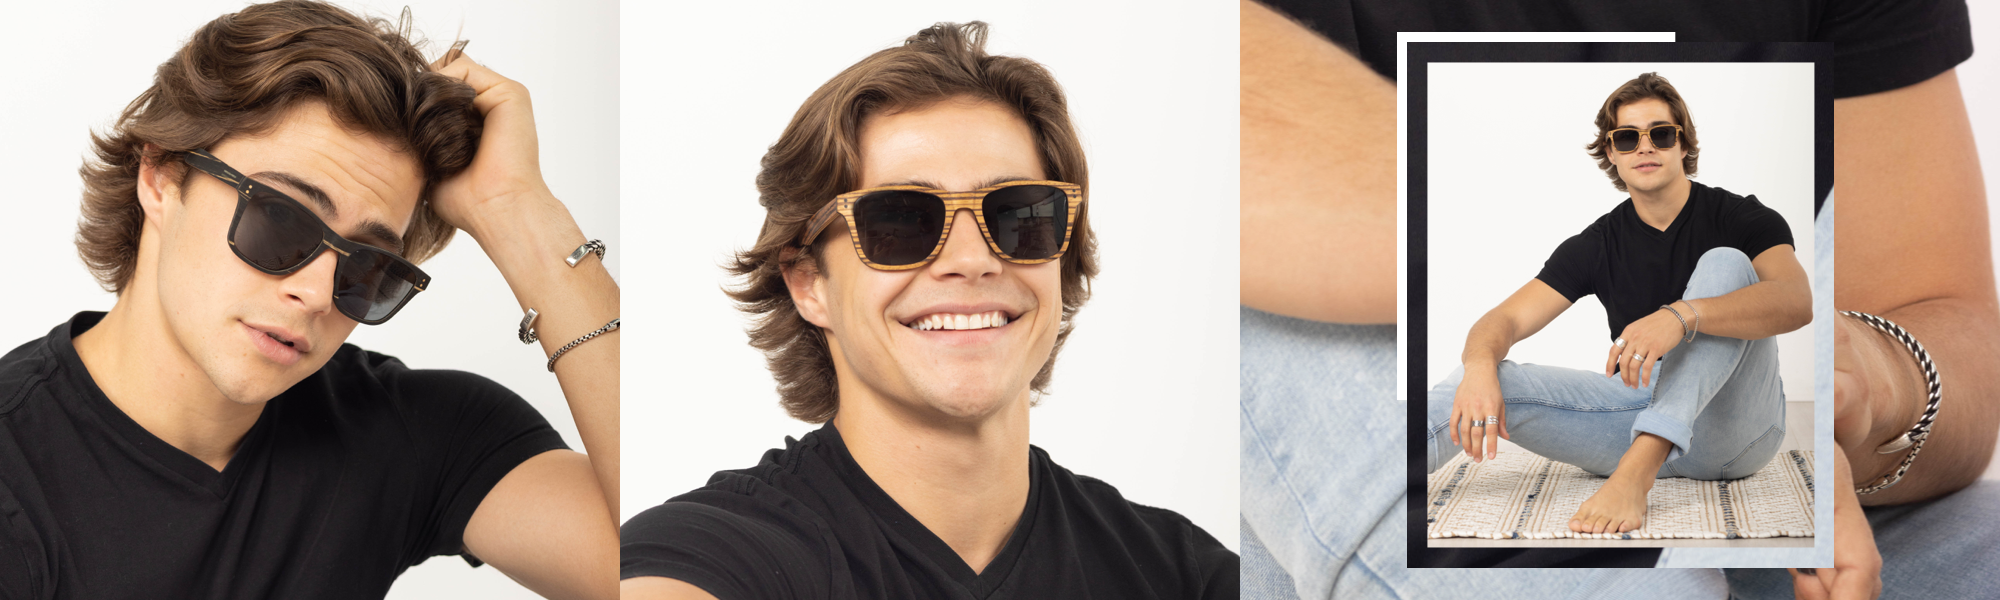 New Men's Sunglasses